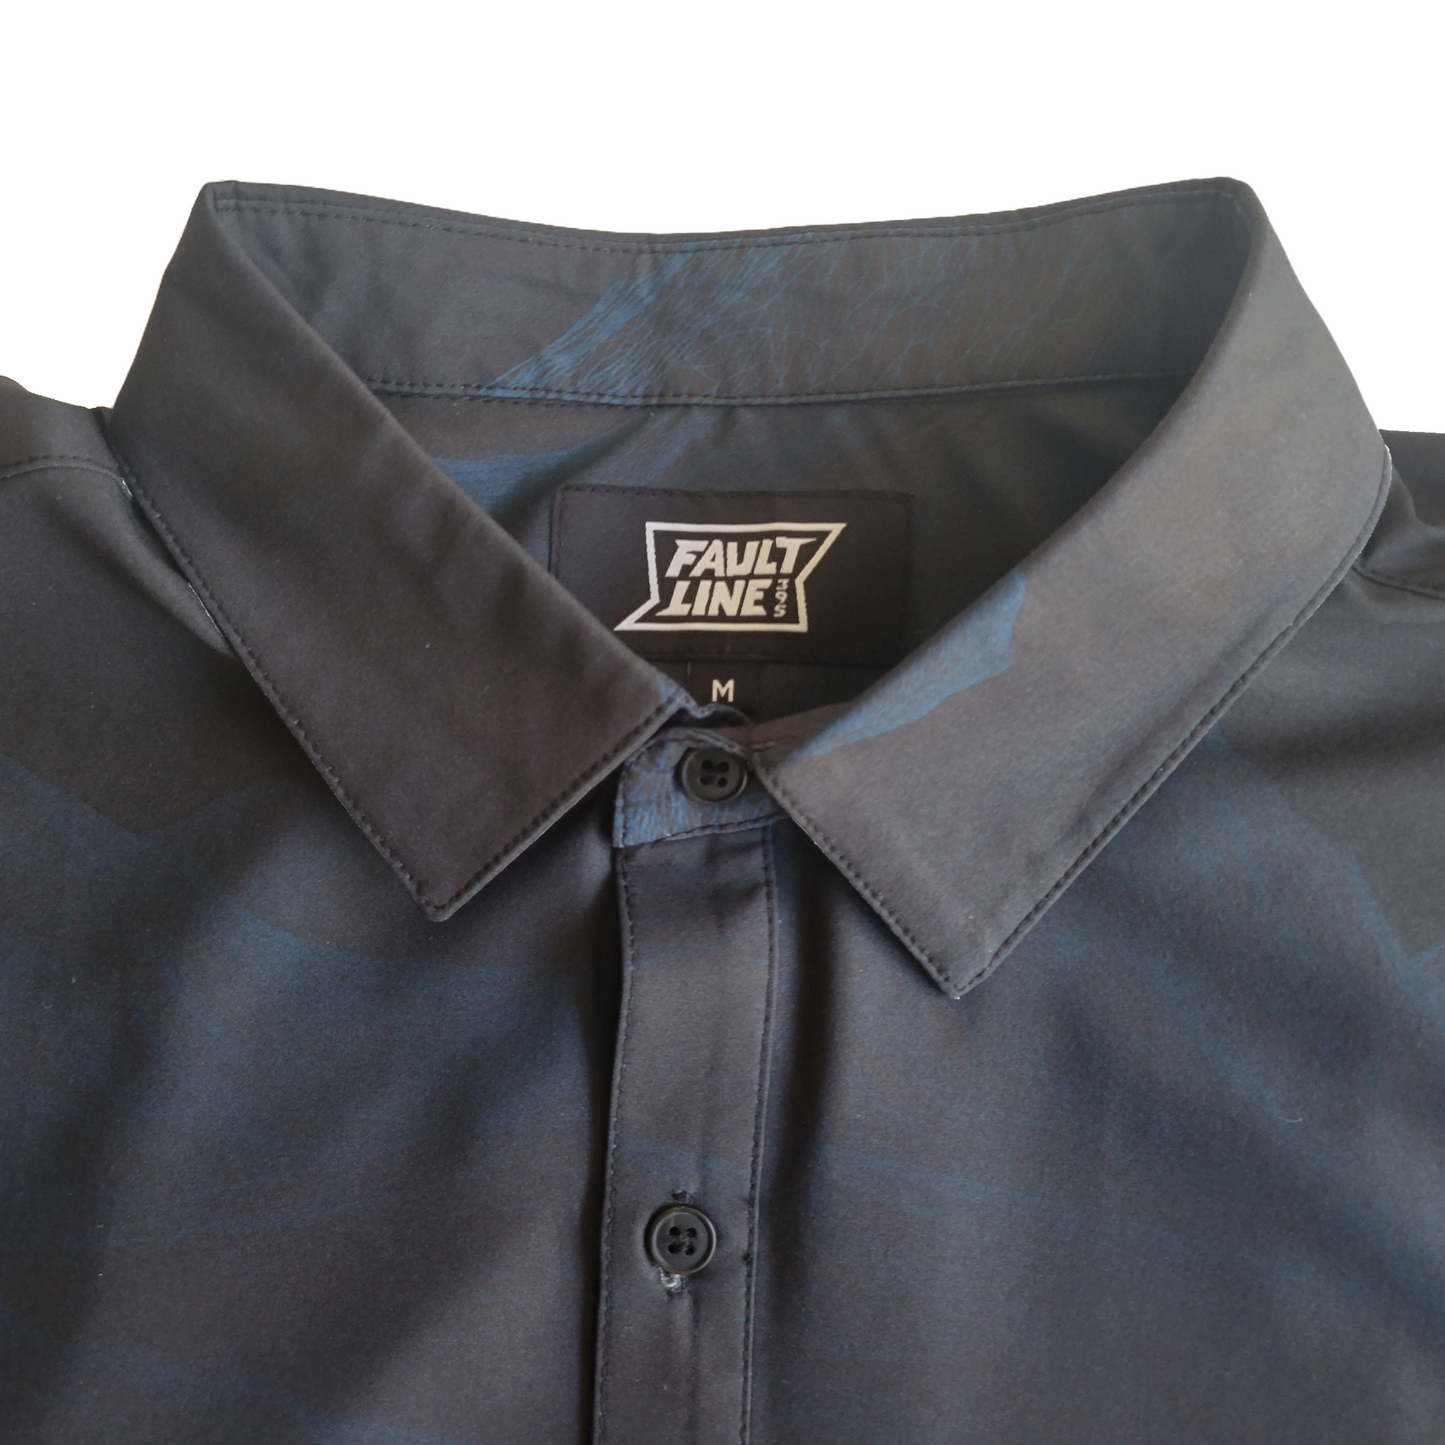 Langley Stretch Shirt & Short Set - Mountain Print